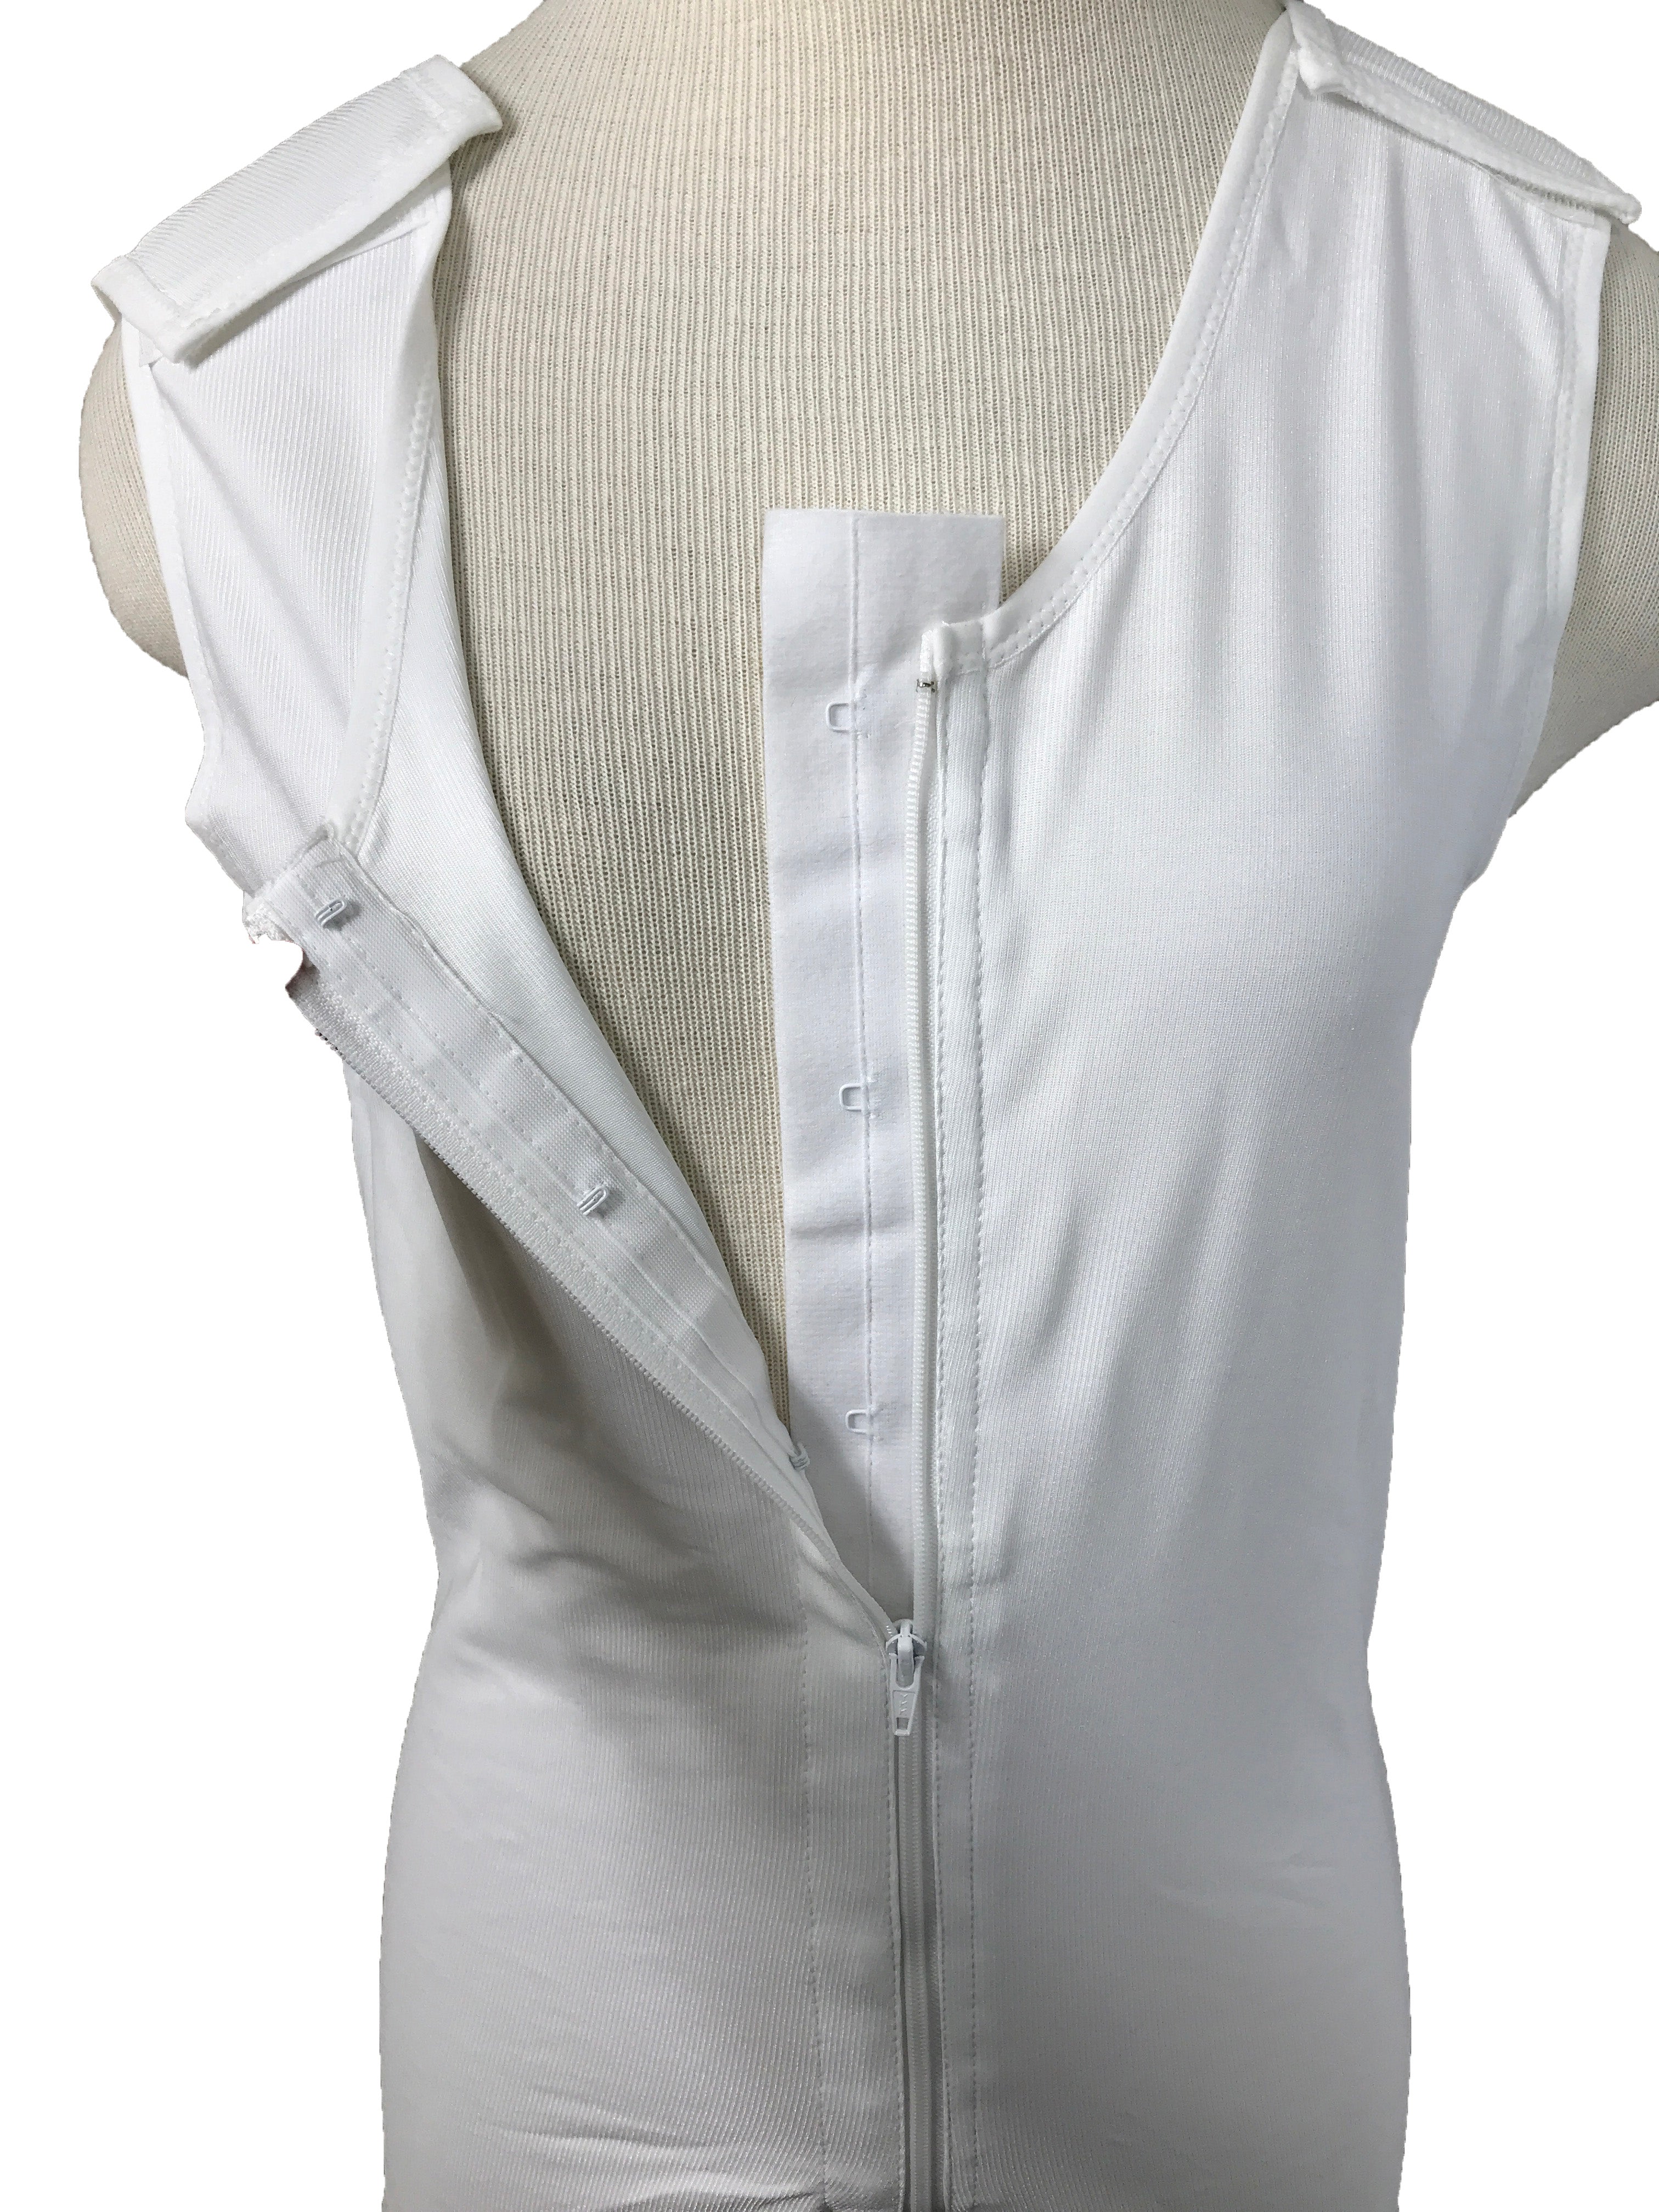 Marena ComfortWear Compression and Support Garment White Bodysuit Men's Size 2XL